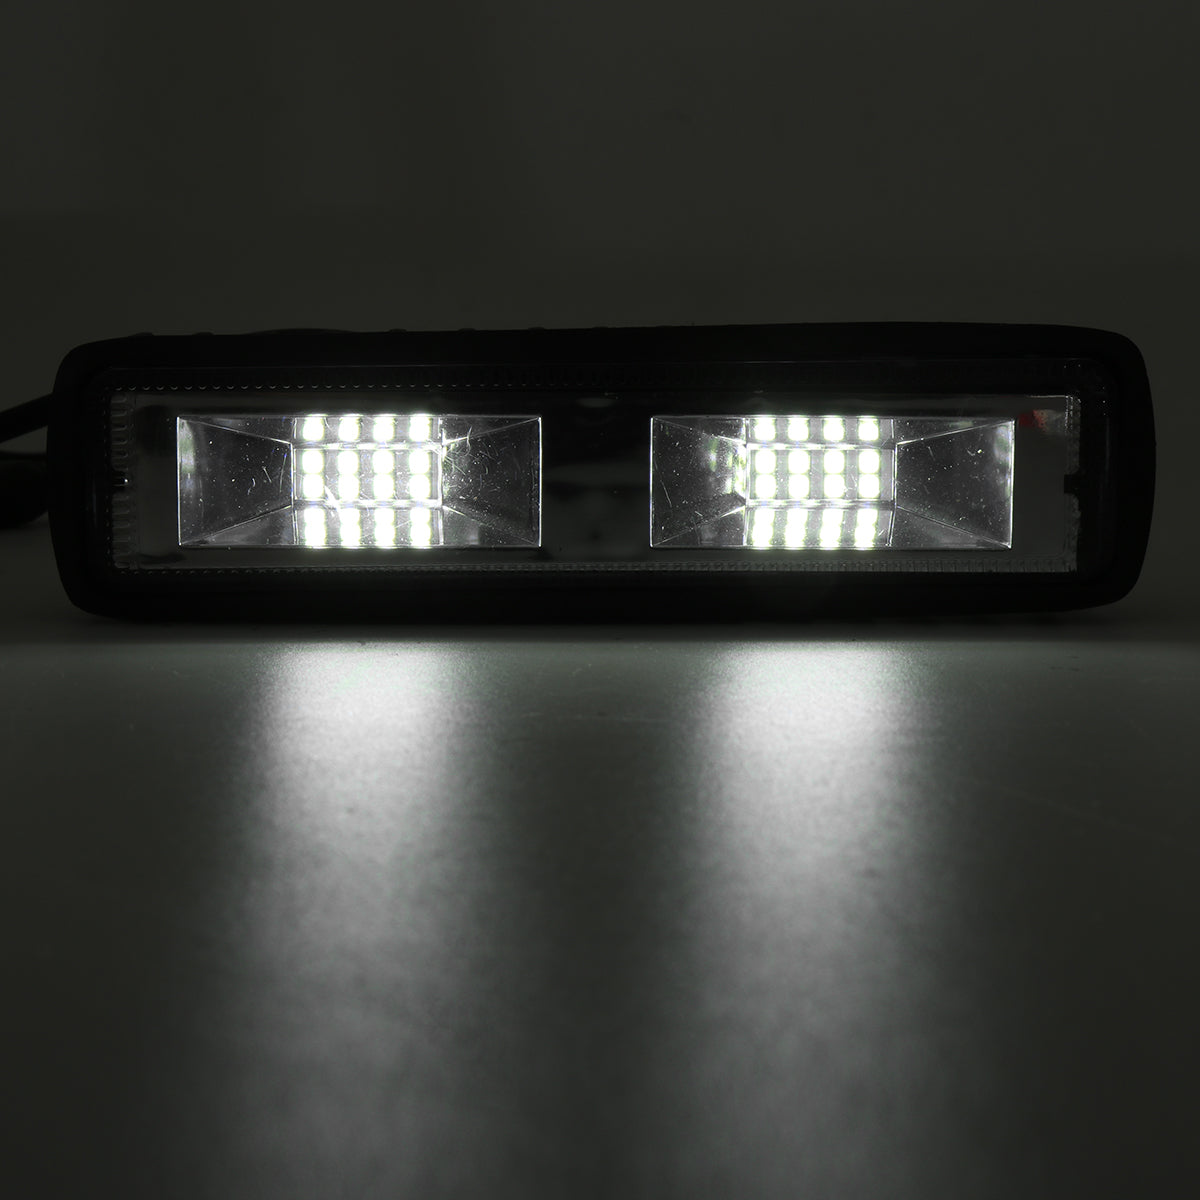 Lavender 6 inch 12V 48W LED WORK LIGHT BAR Spot Lamp For OFF-ROAD 4WD SUV ATV CAR LAMPS B